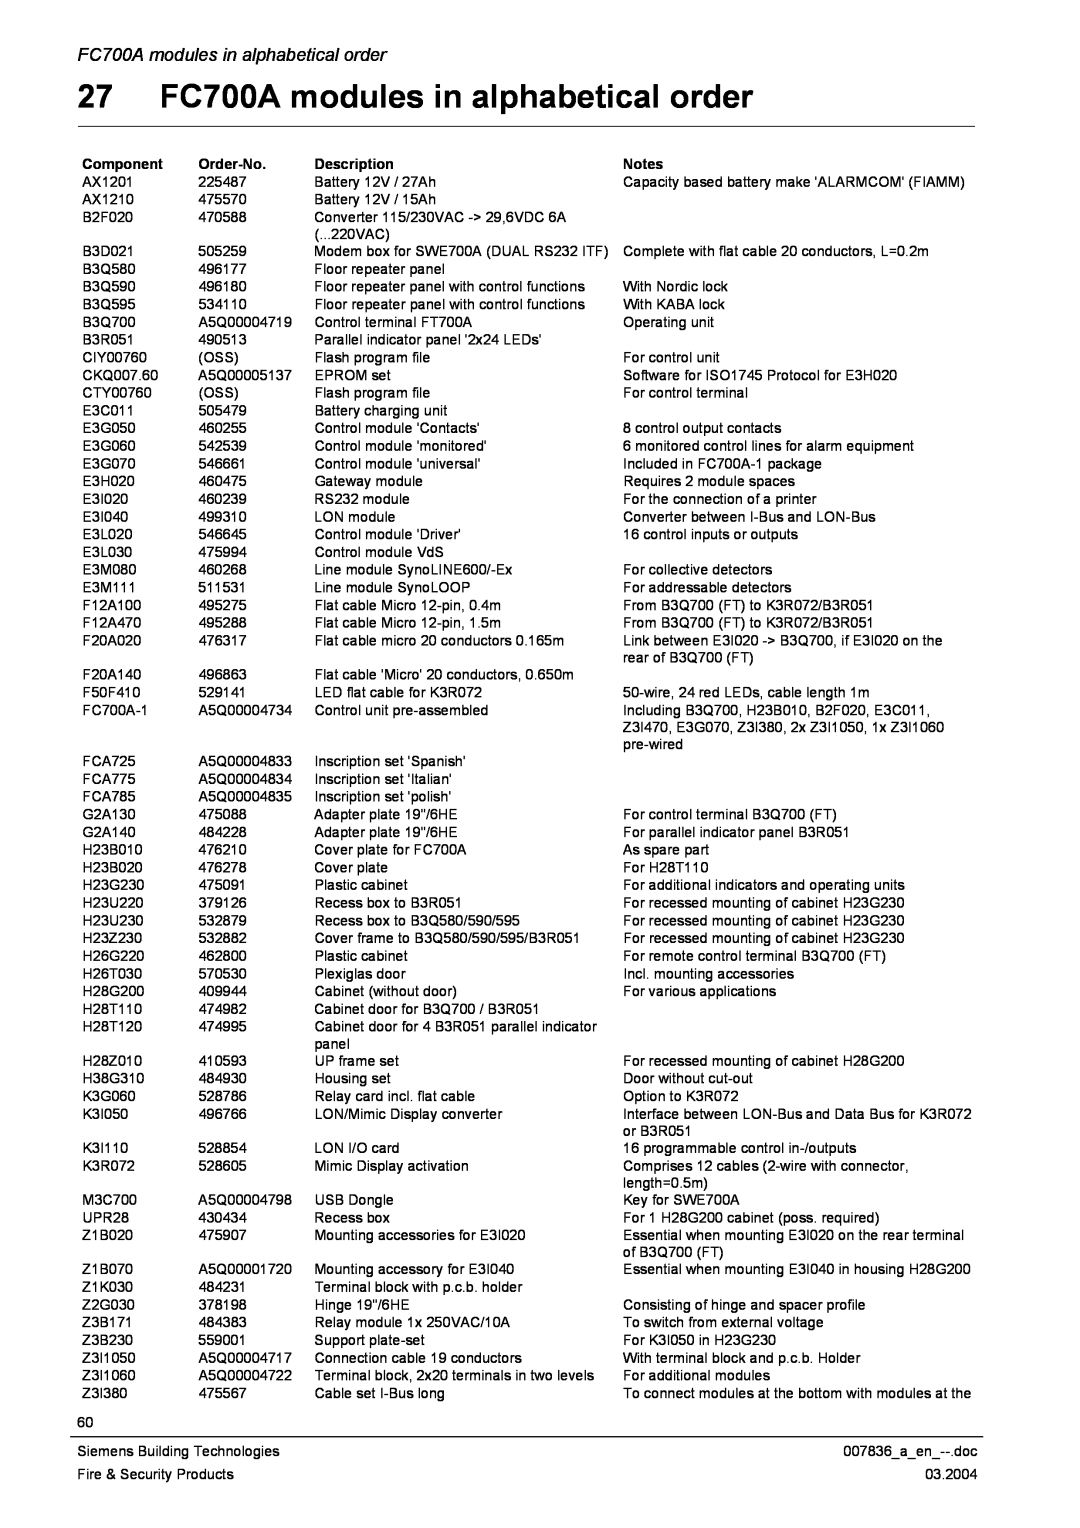 Siemens manual 27 FC700A modules in alphabetical order 